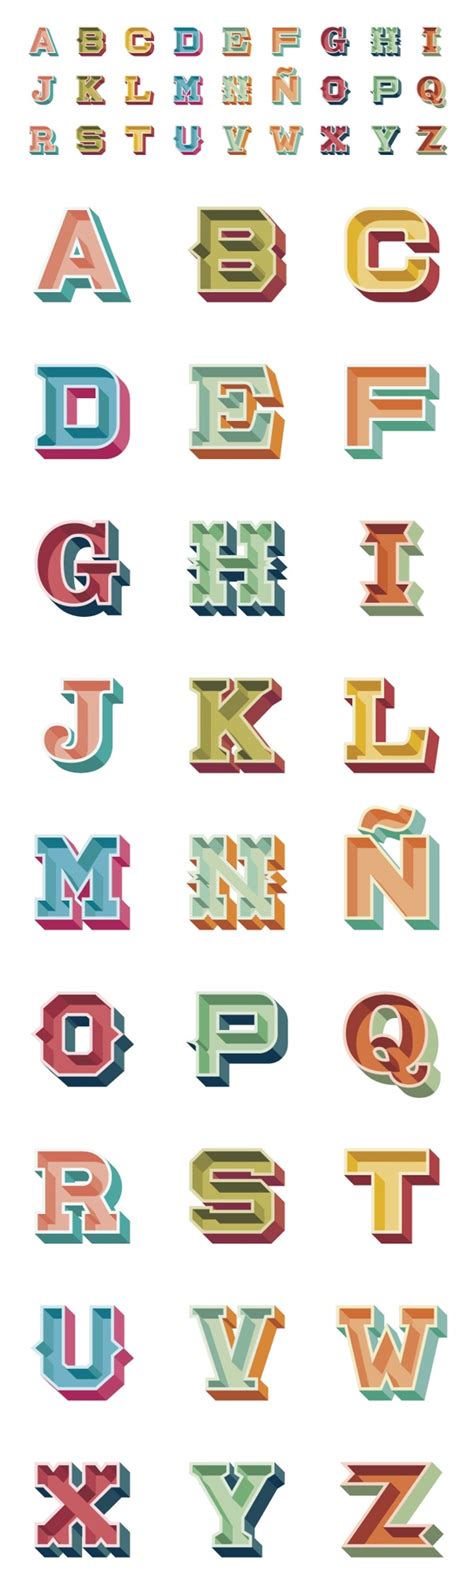 AbcdefghijklmnÑopqrstuvwxyz Lettering Typography Lettering Design